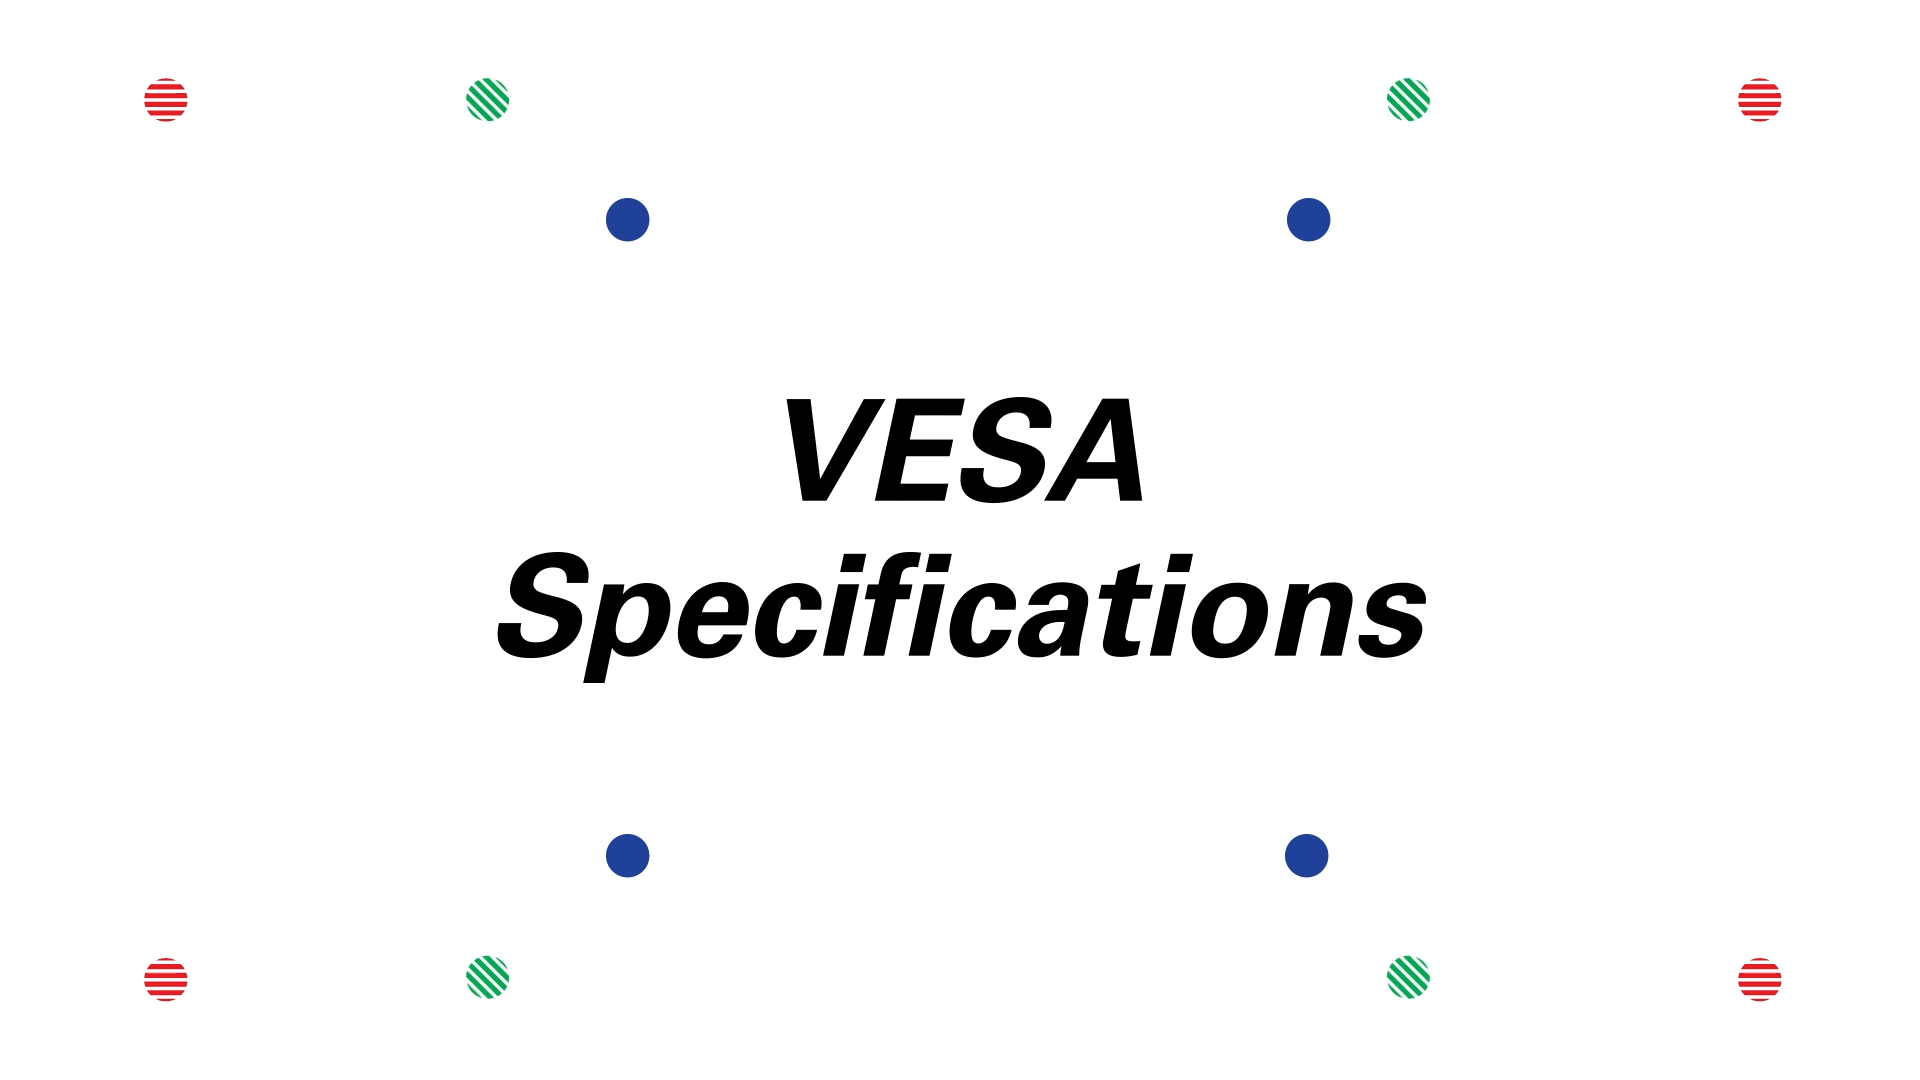 VESA Specification Guide